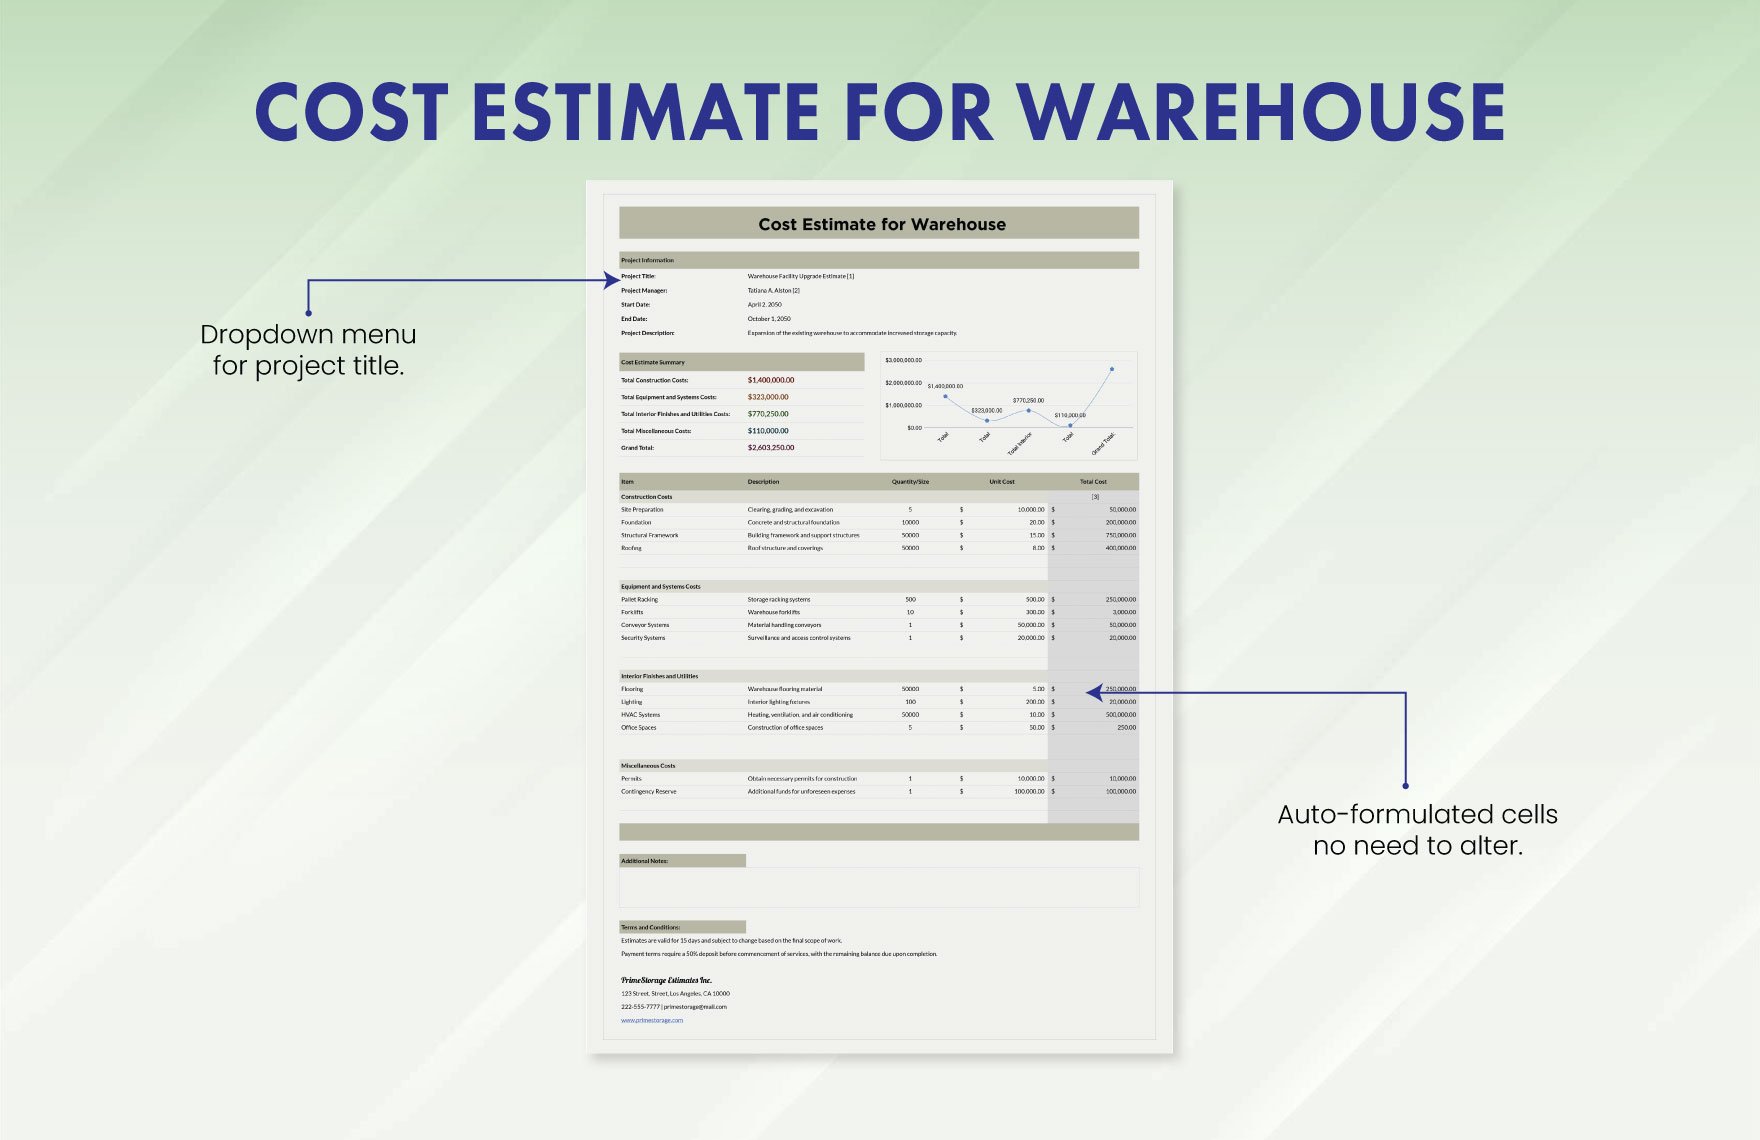 Cost Estimate for Warehouse Template